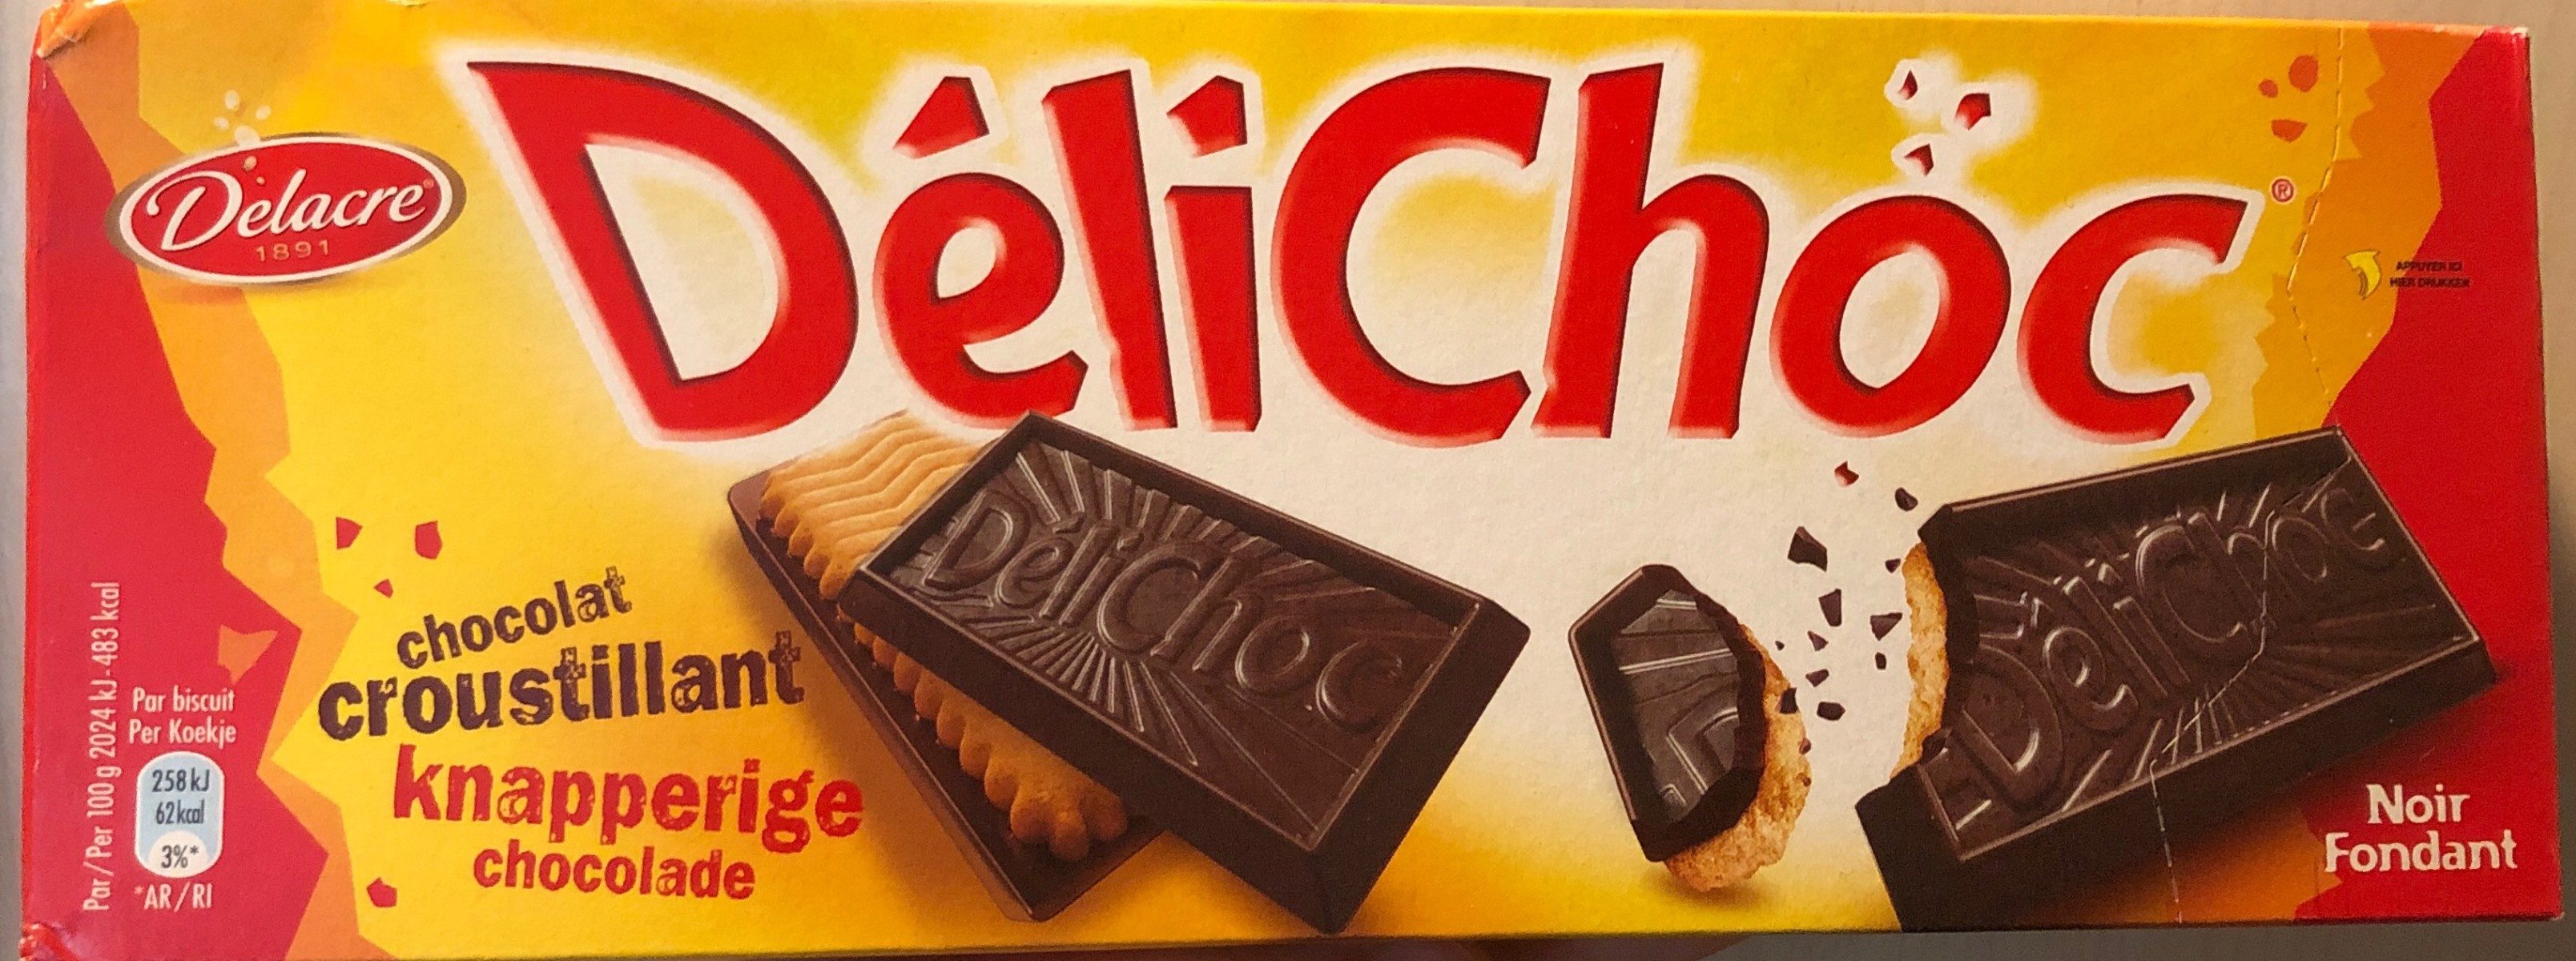 Chocolat croustillant - Product - fr